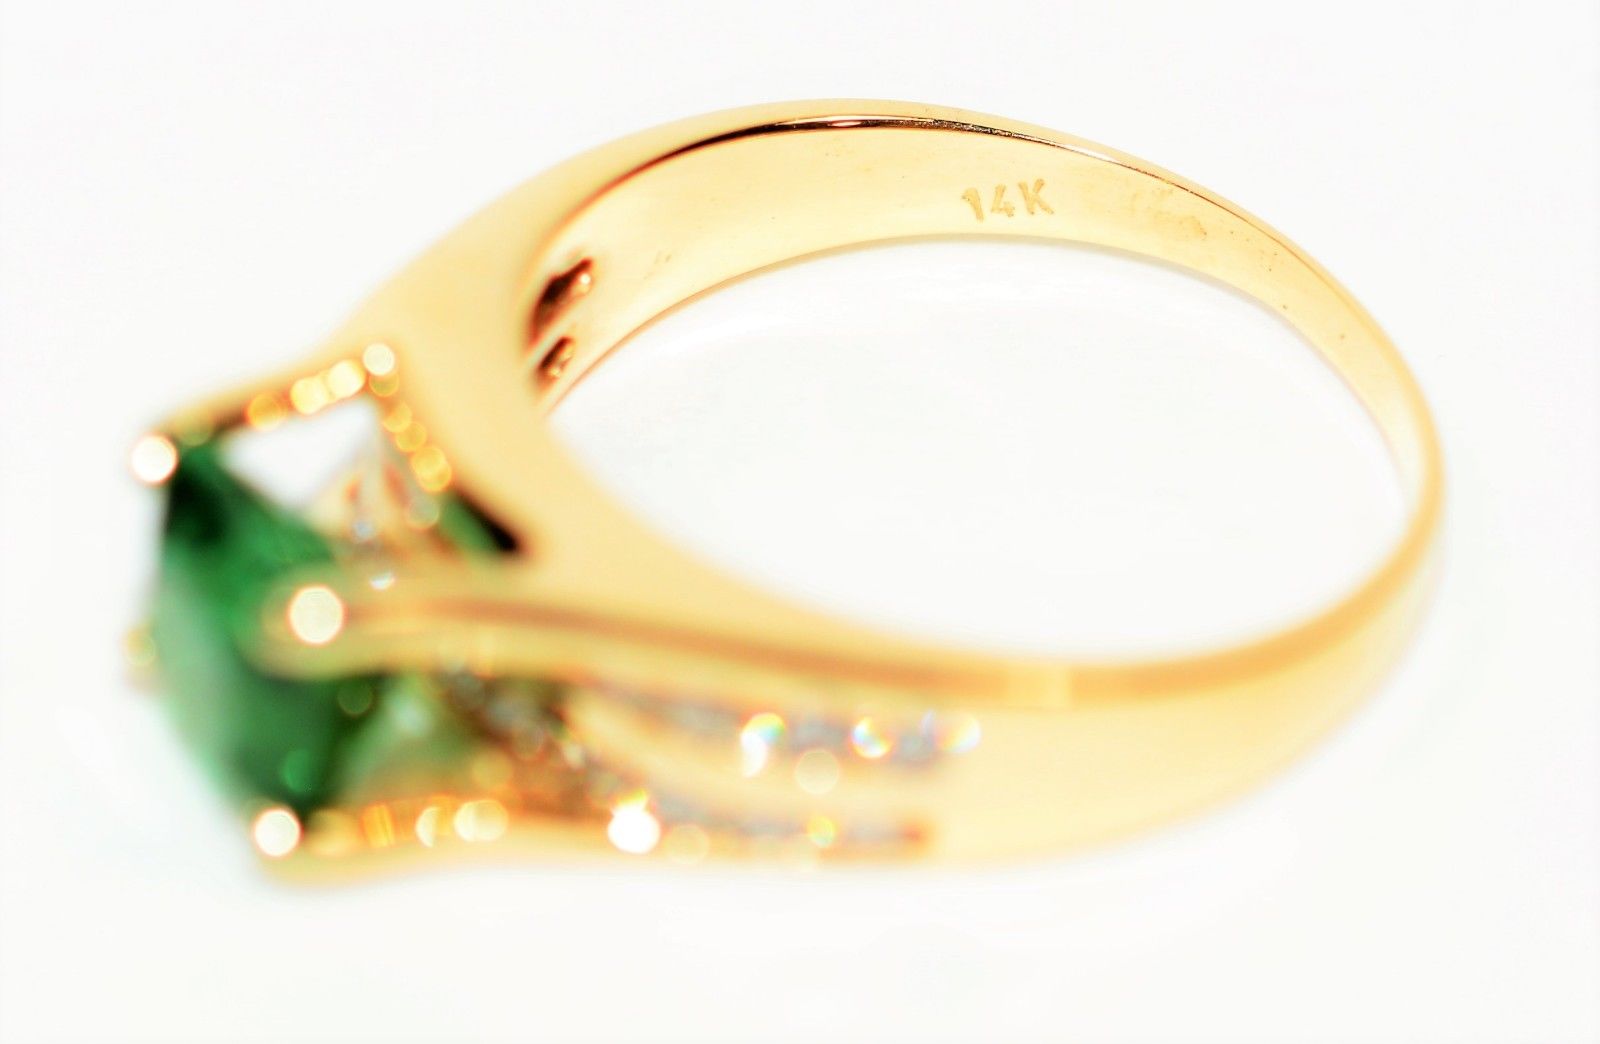 Certified Natural Paraiba Tourmaline & Diamond Ring 14K solid Gold 1.91tcw Cocktail Statement Women's Estate Jewelry